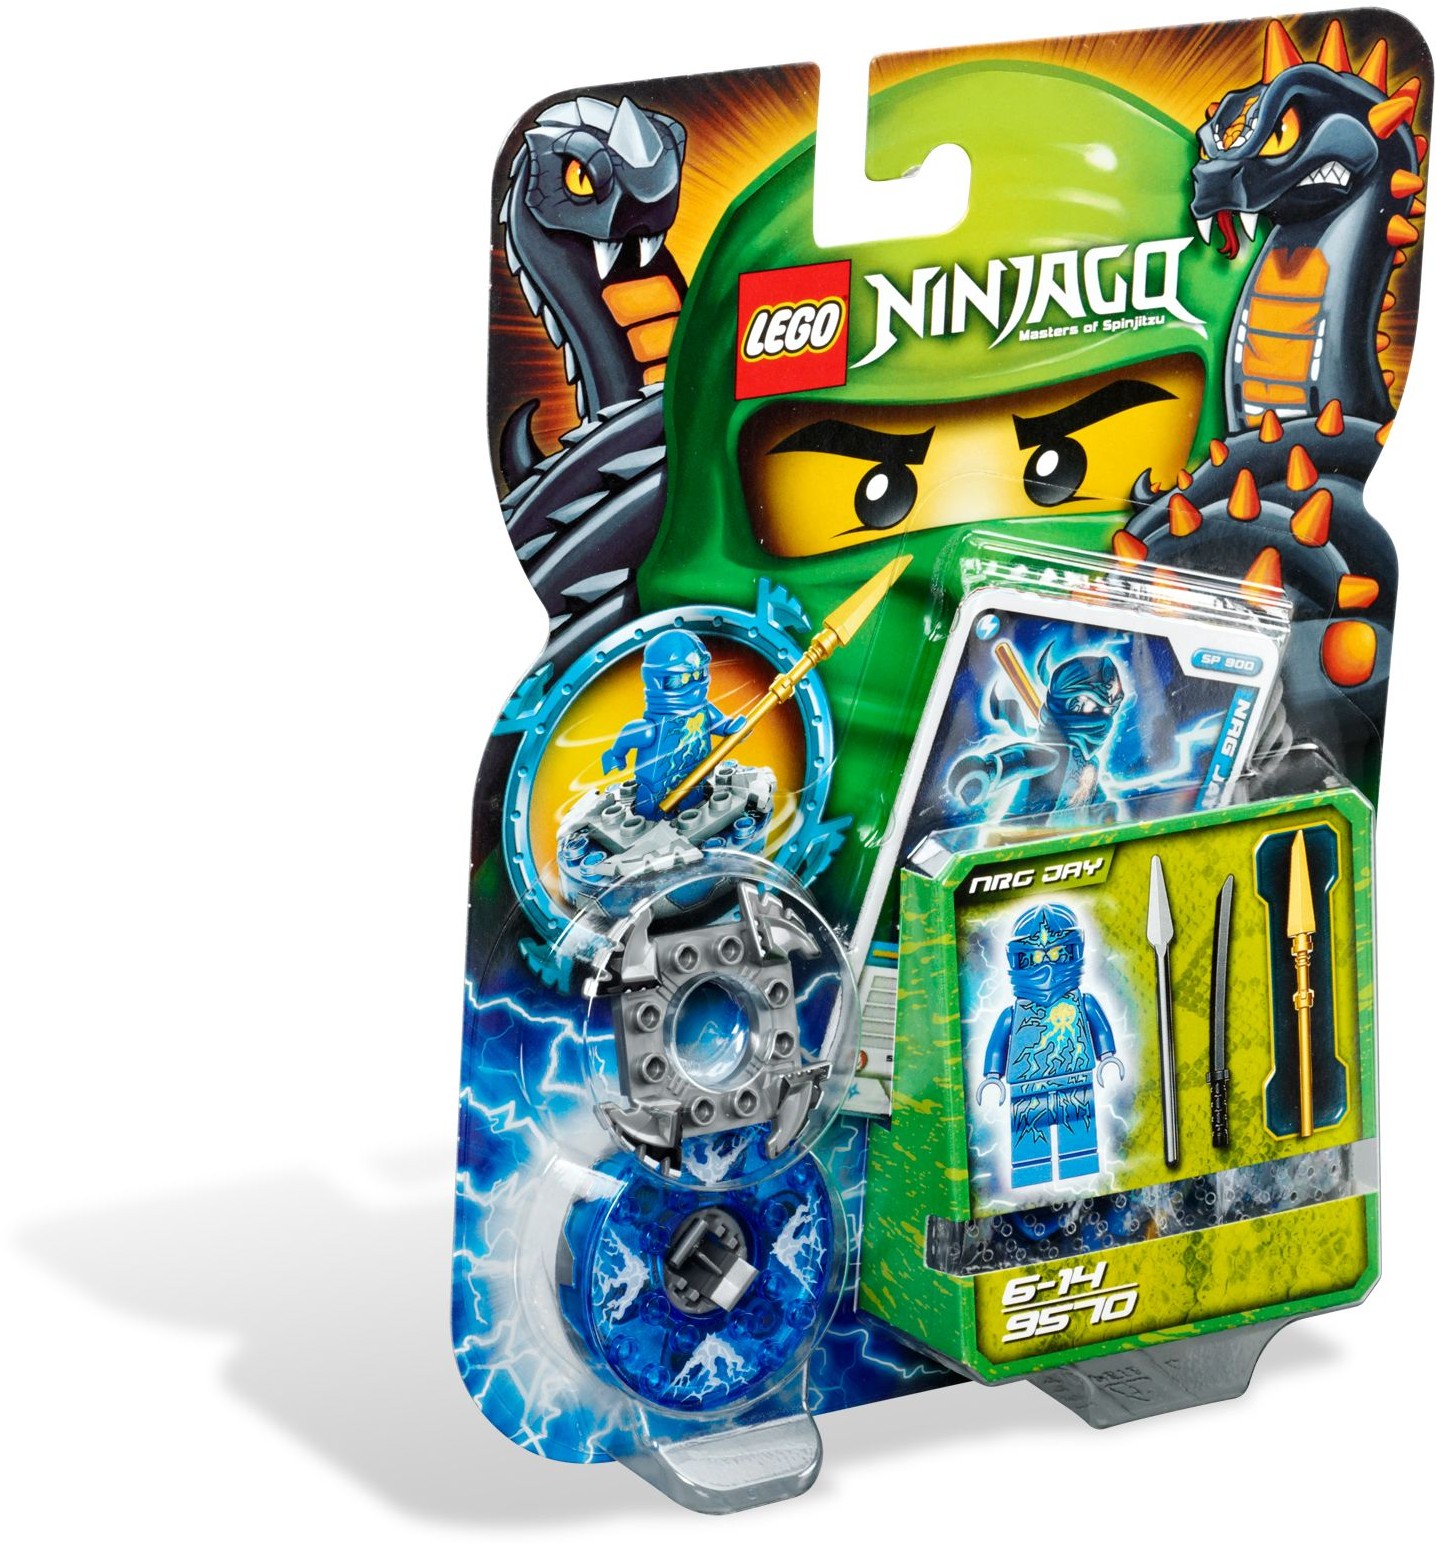 Lego 9570 NRG - Lego Ninjago set for best price